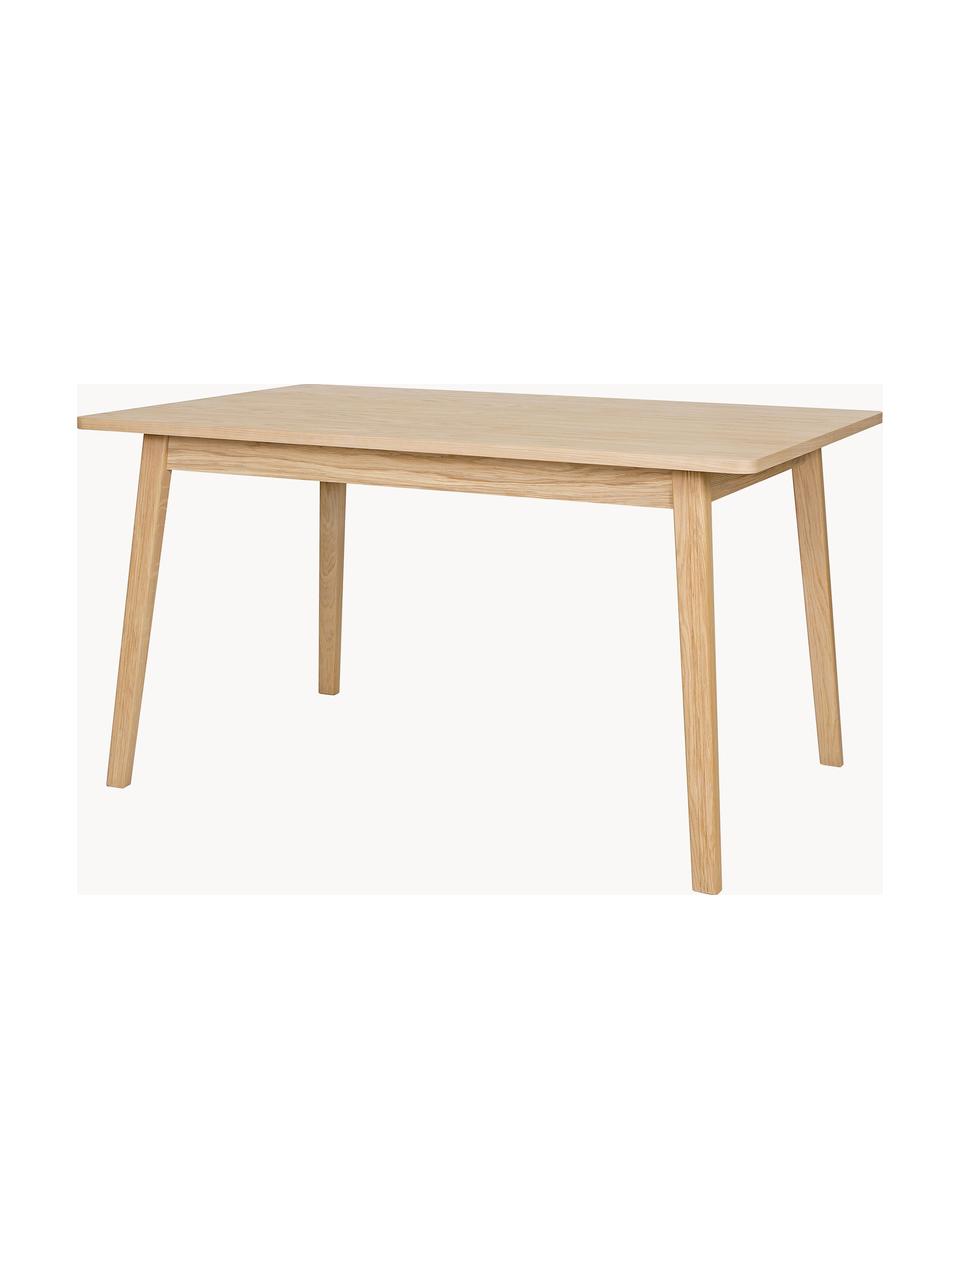 Stół do jadalni z drewna Skagen, Blat: fornir z drewna dębowego, Nogi: drewno dębowe, Drewno dębowe, S 180 x G 90 cm